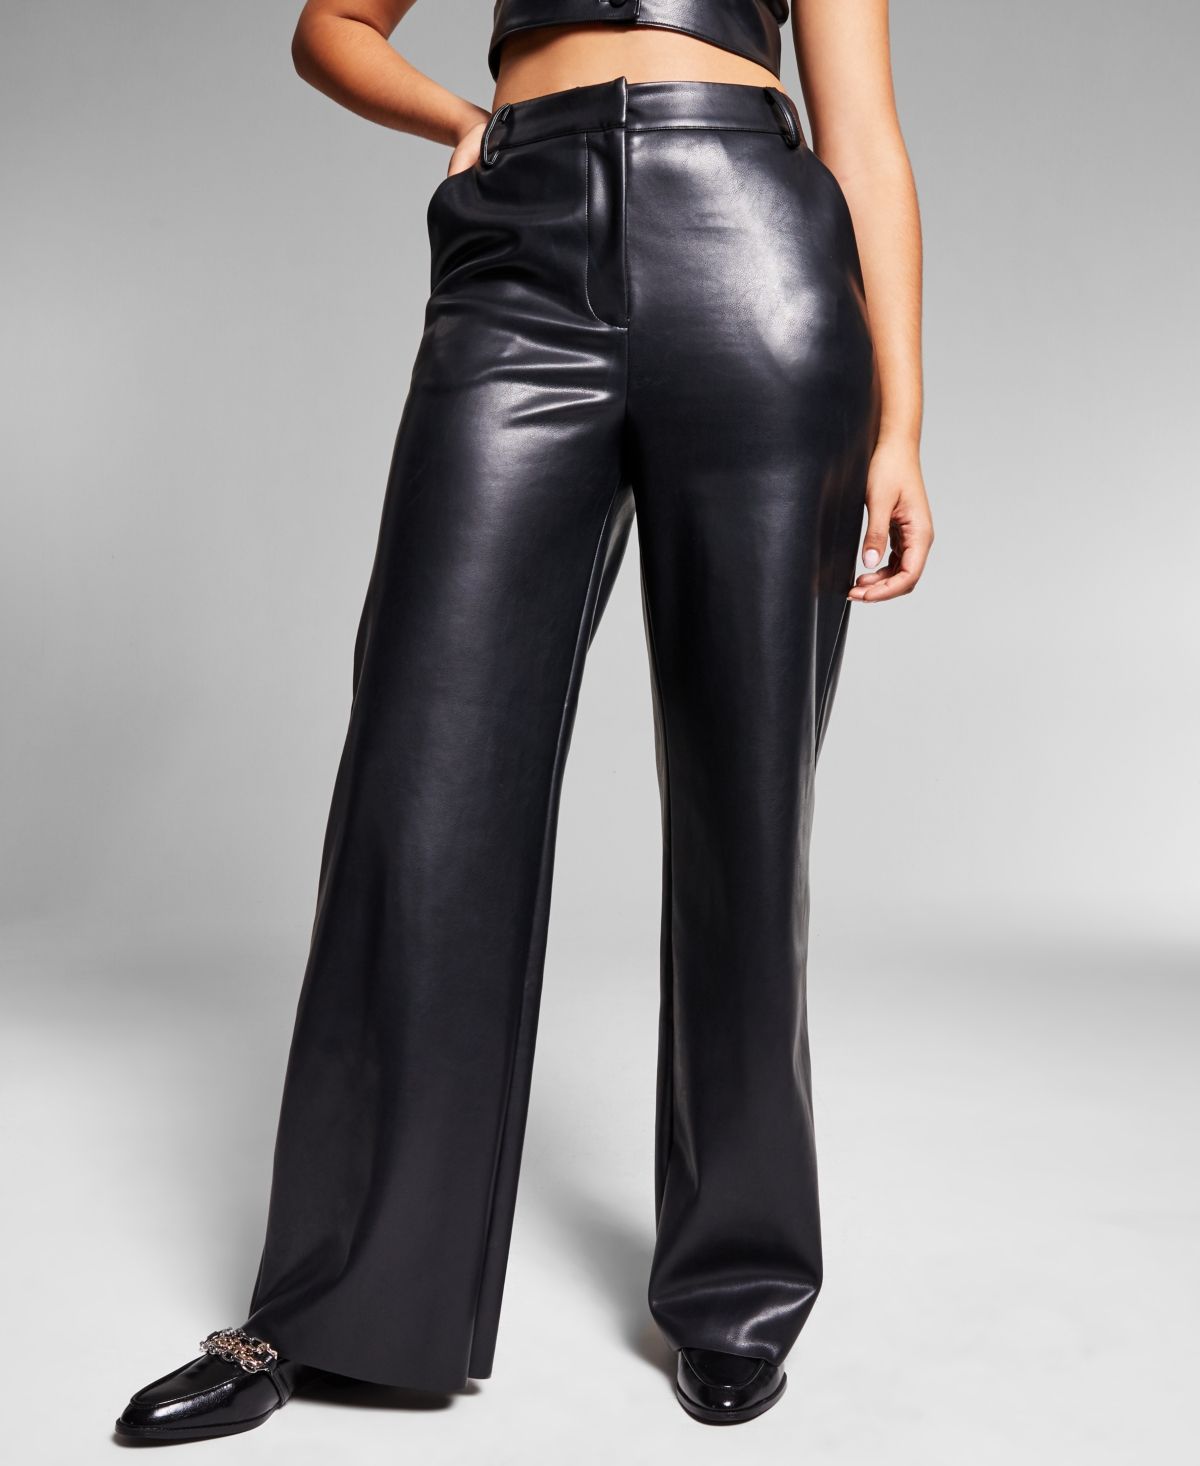 Jeannie Mai X Inc Iman Faux-Leather Pants, Regular & Petite Created for Macy's | Macys (US)